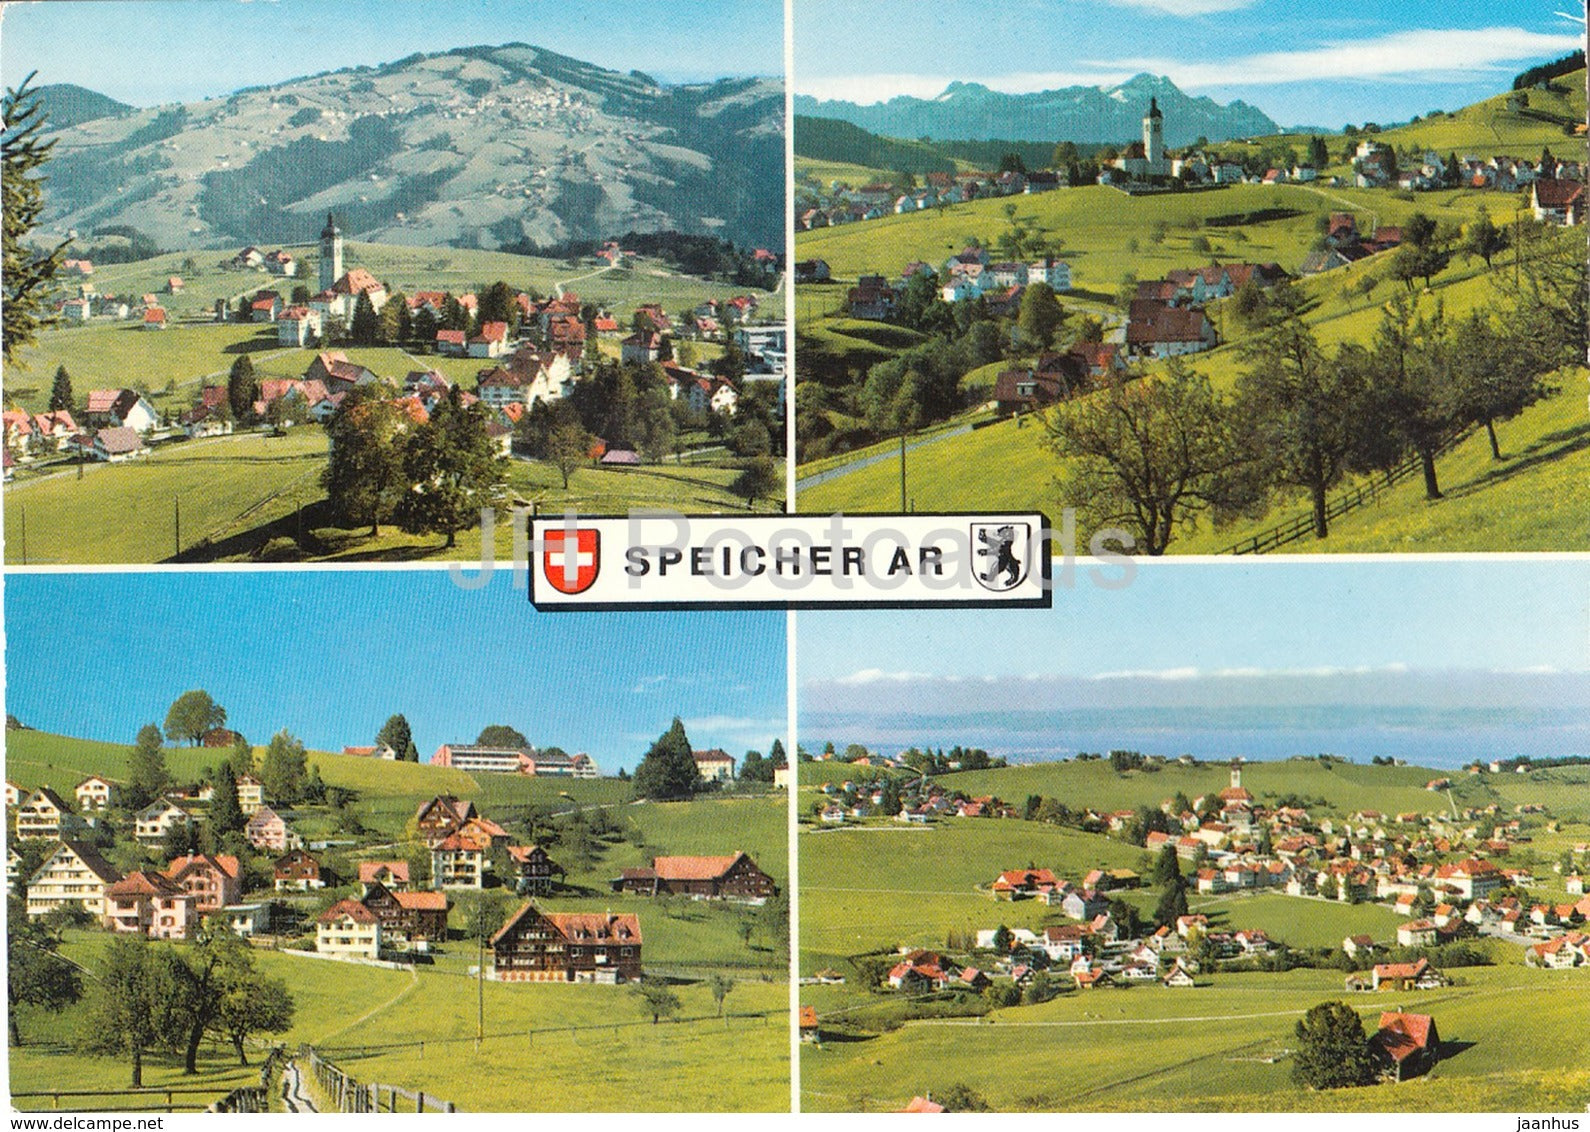 Speicher AR - multiview - 1975 - Switzerland - used - JH Postcards